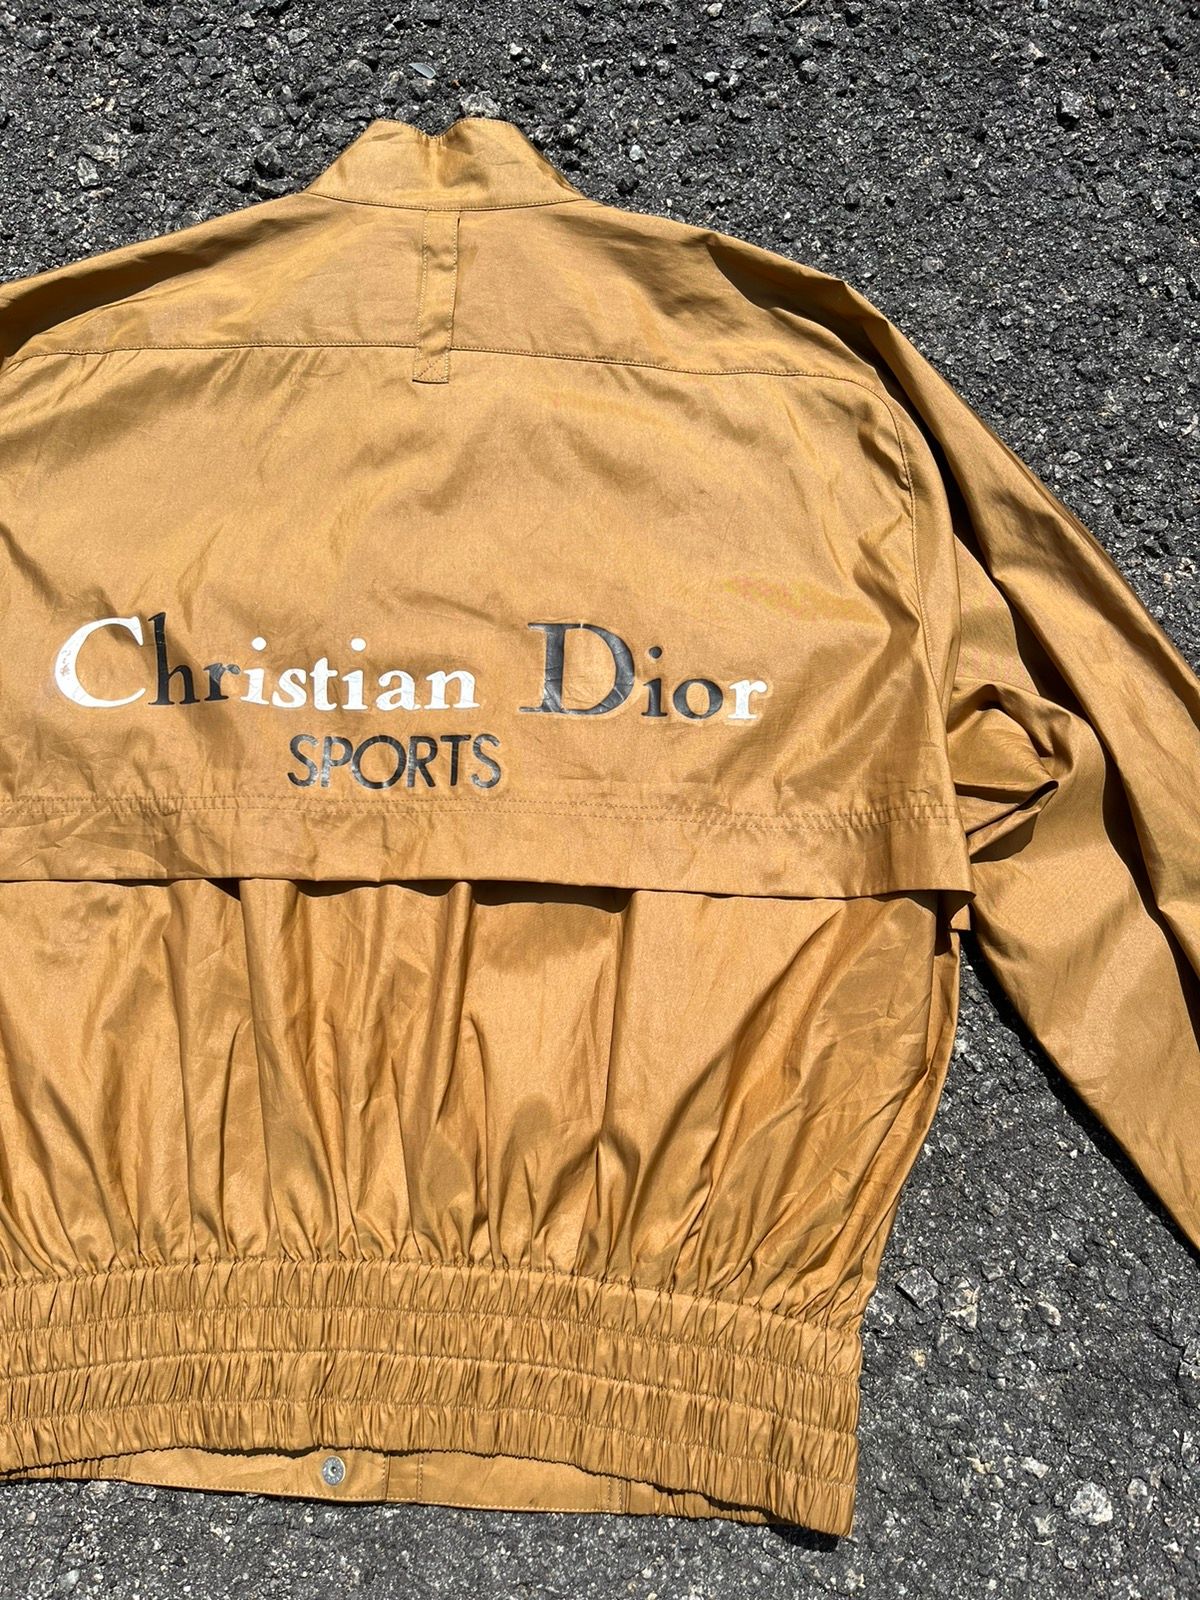 Dior Vintage 2001 Christian Dior Sport Windbreaker Jacket Size US M / EU 48-50 / 2 - 2 Preview